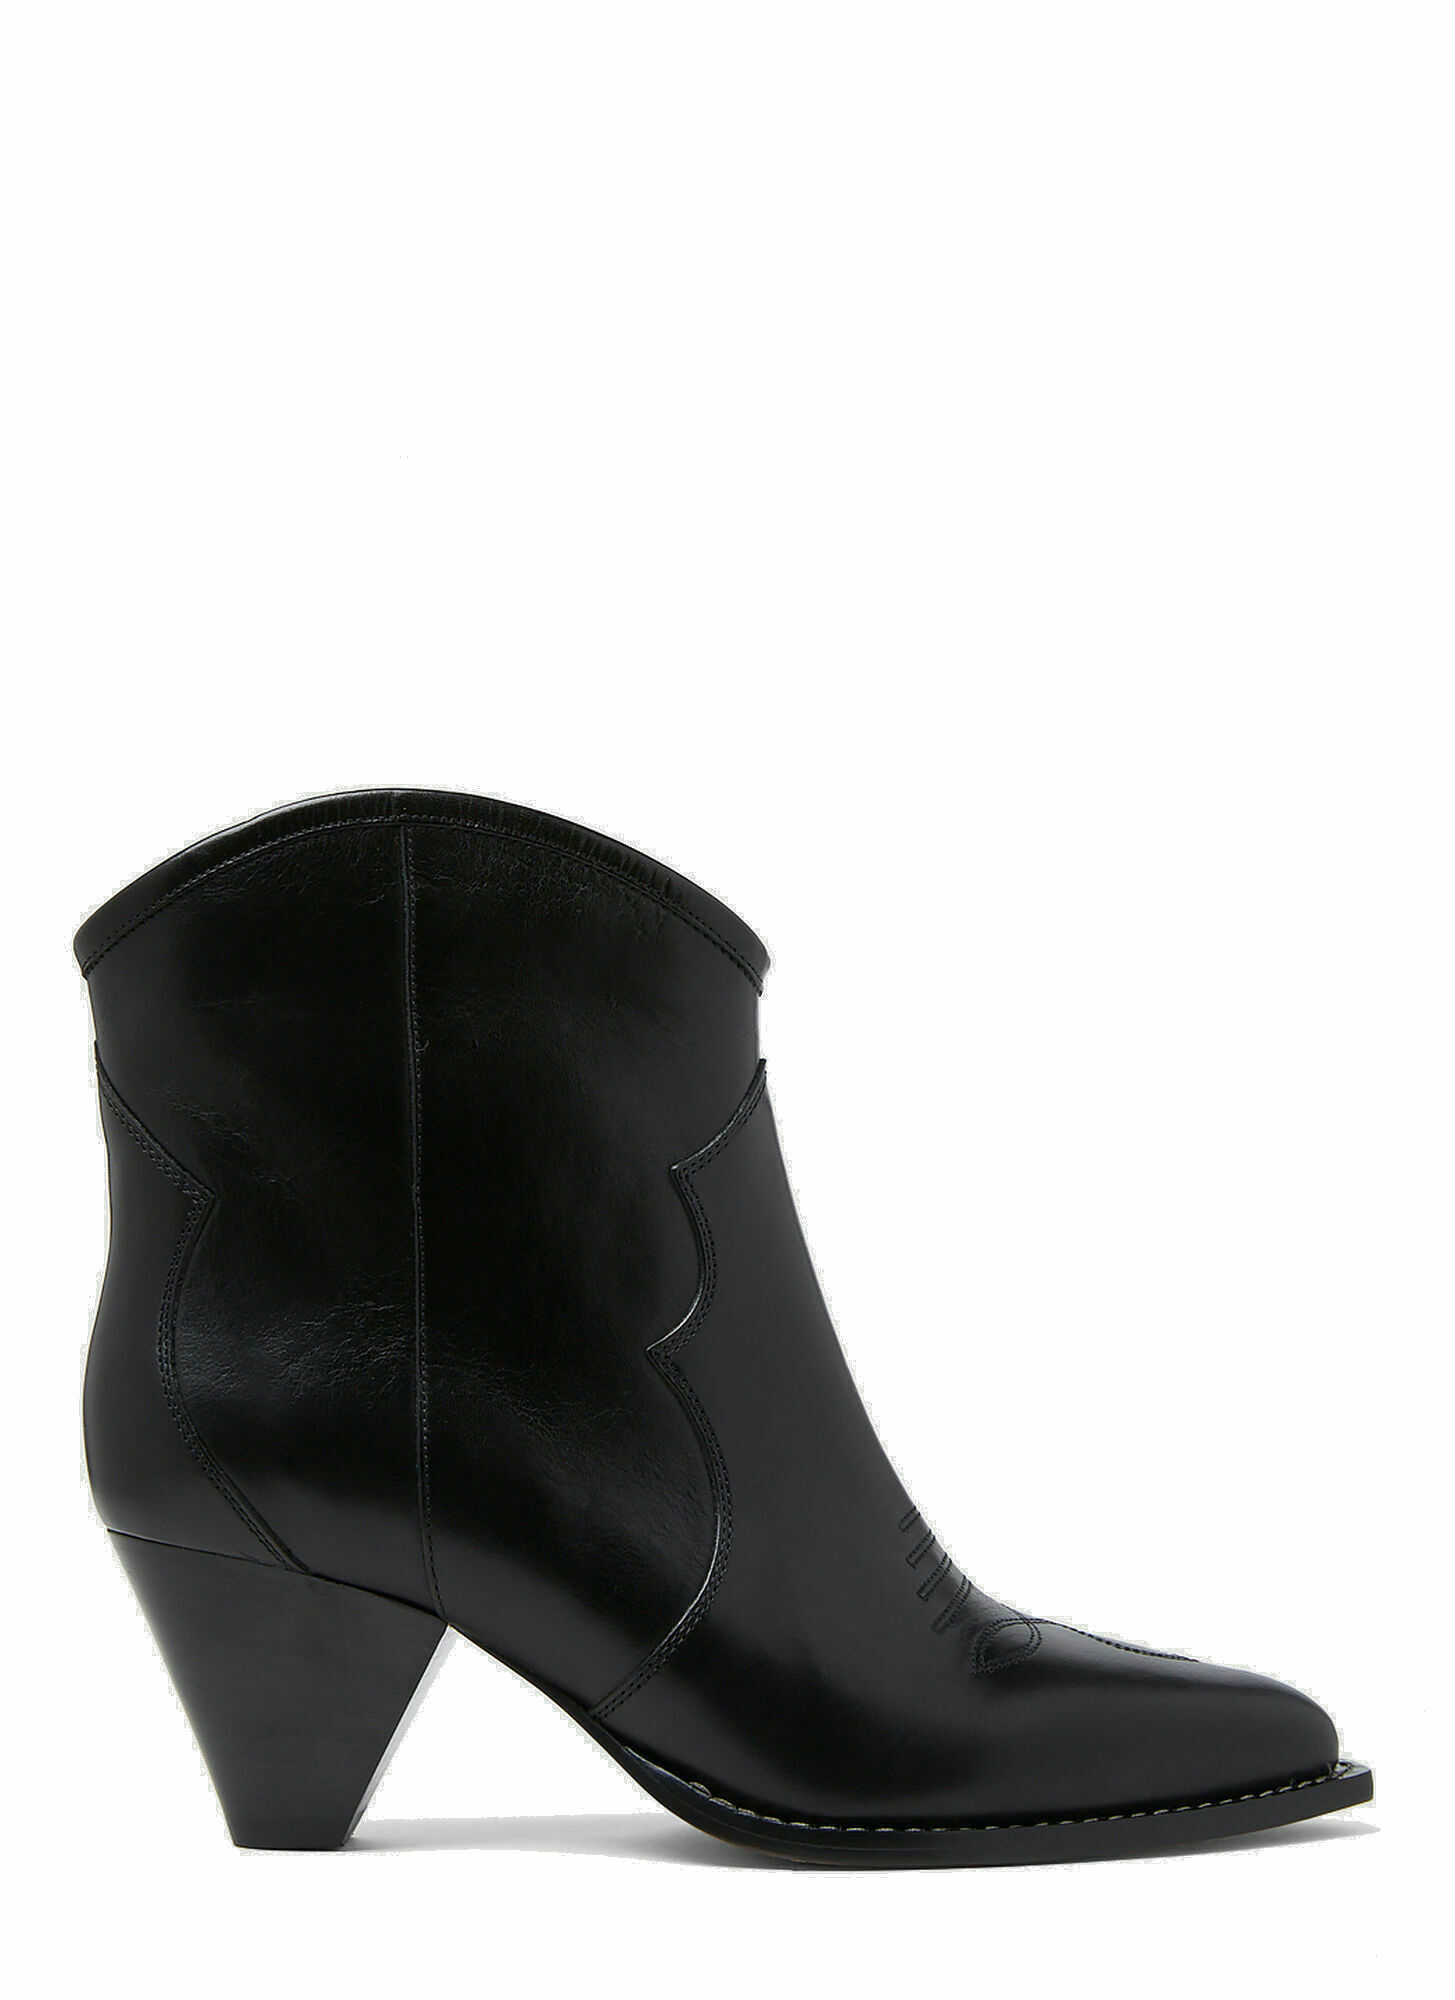 Darizo Western Boots in Black Isabel Marant